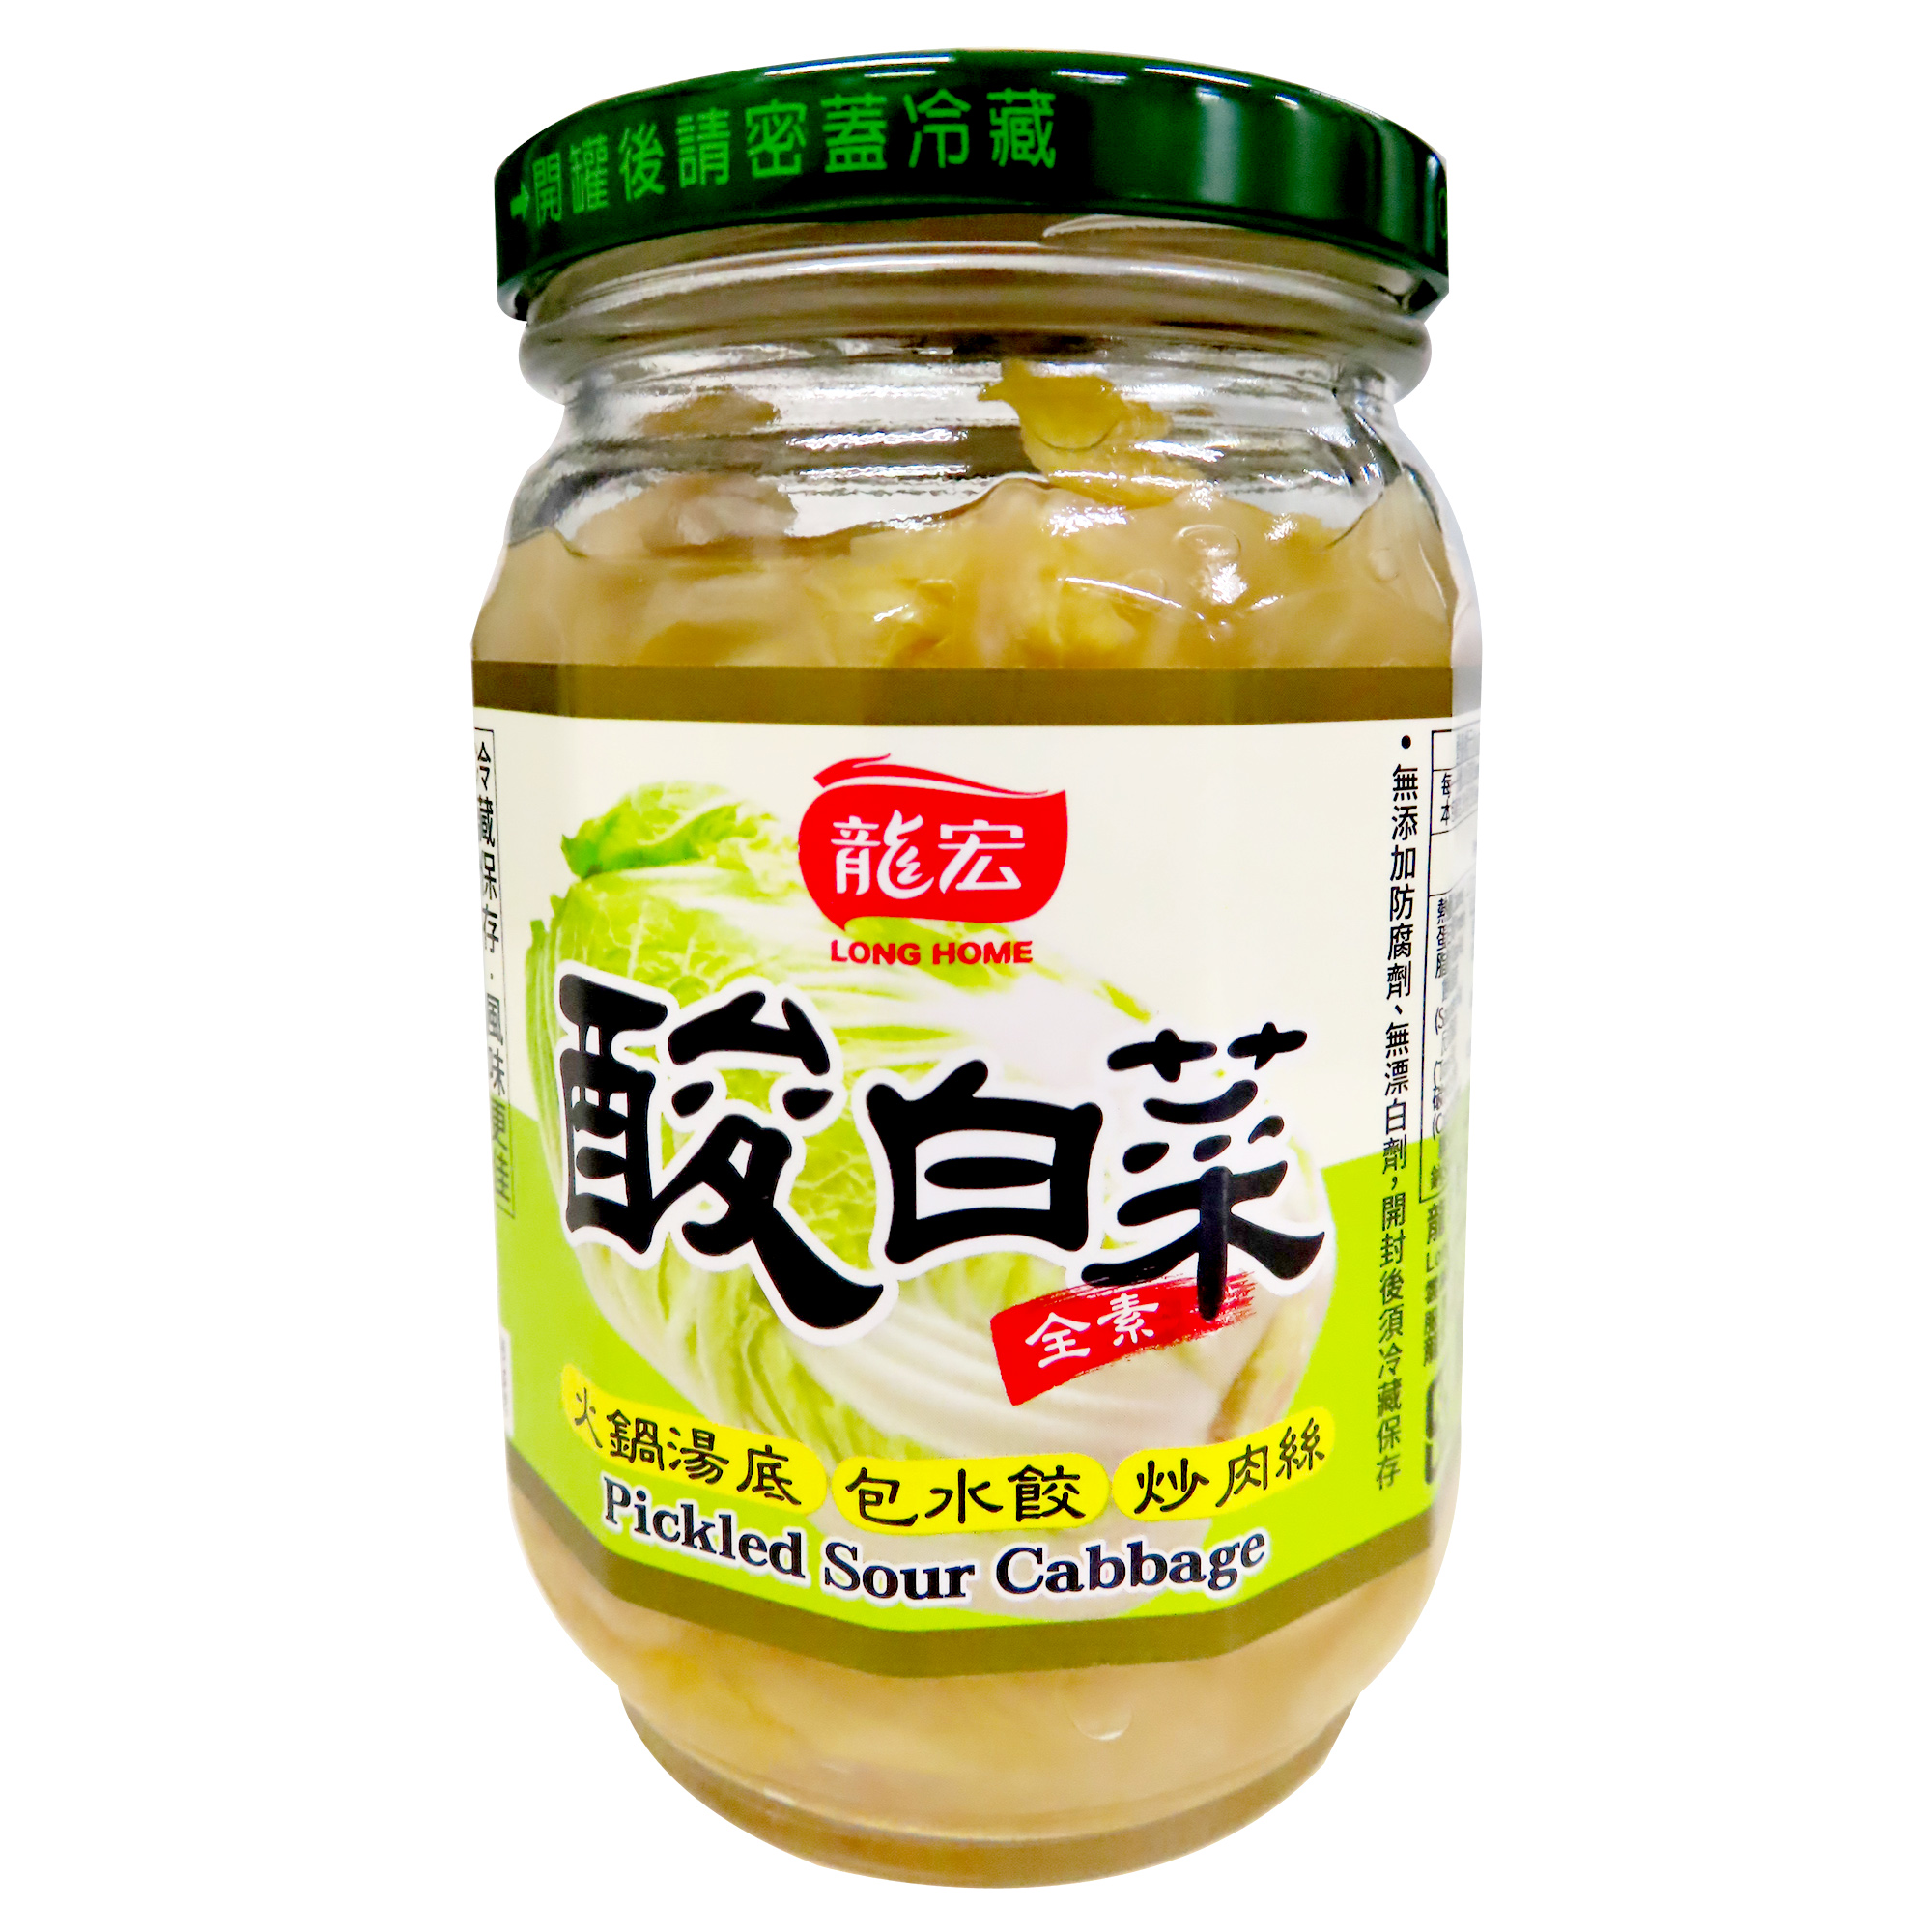 Image Pickled Sour Cabbage 龙宏酸白菜 560grams